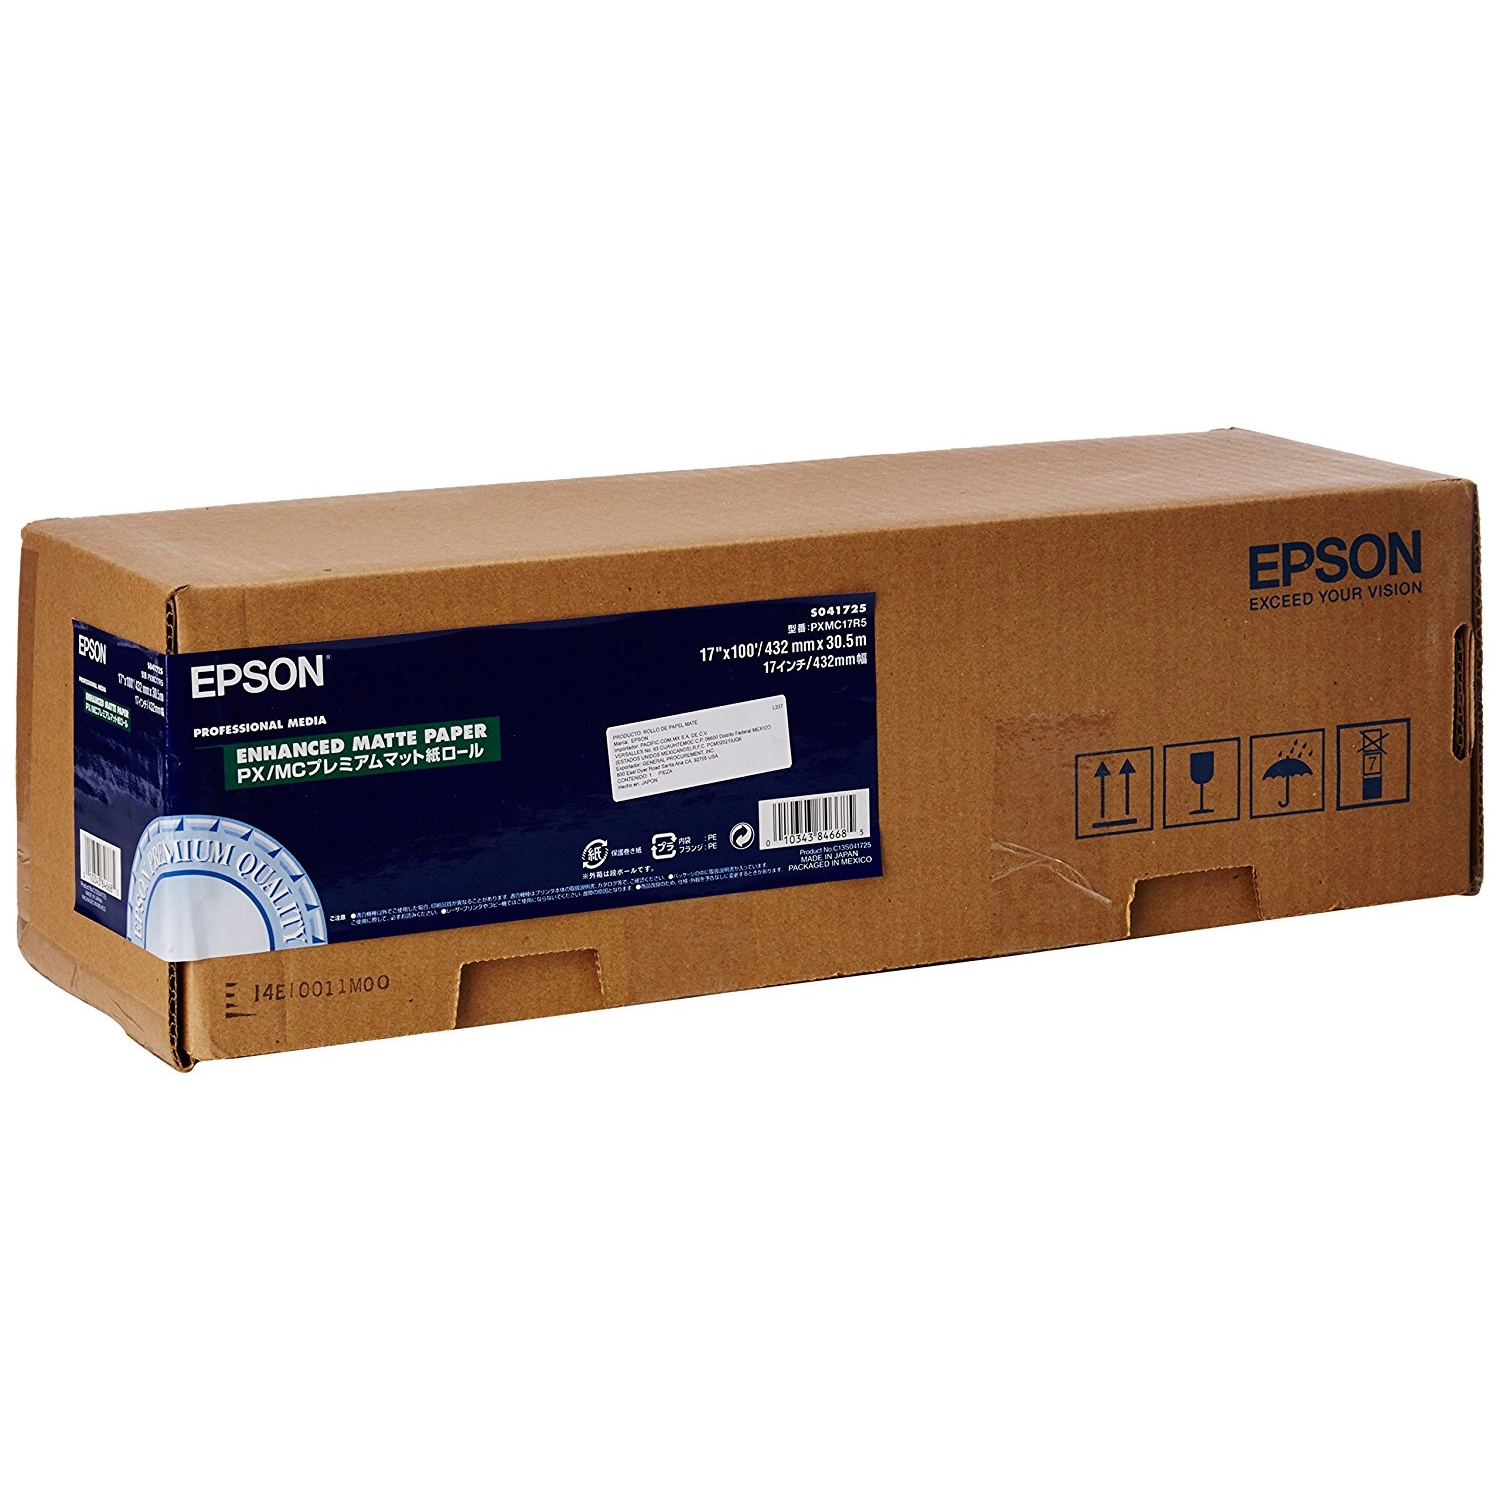 Original Epson S041725 189gsm 17in x 100ft Paper Roll (C13S041725)